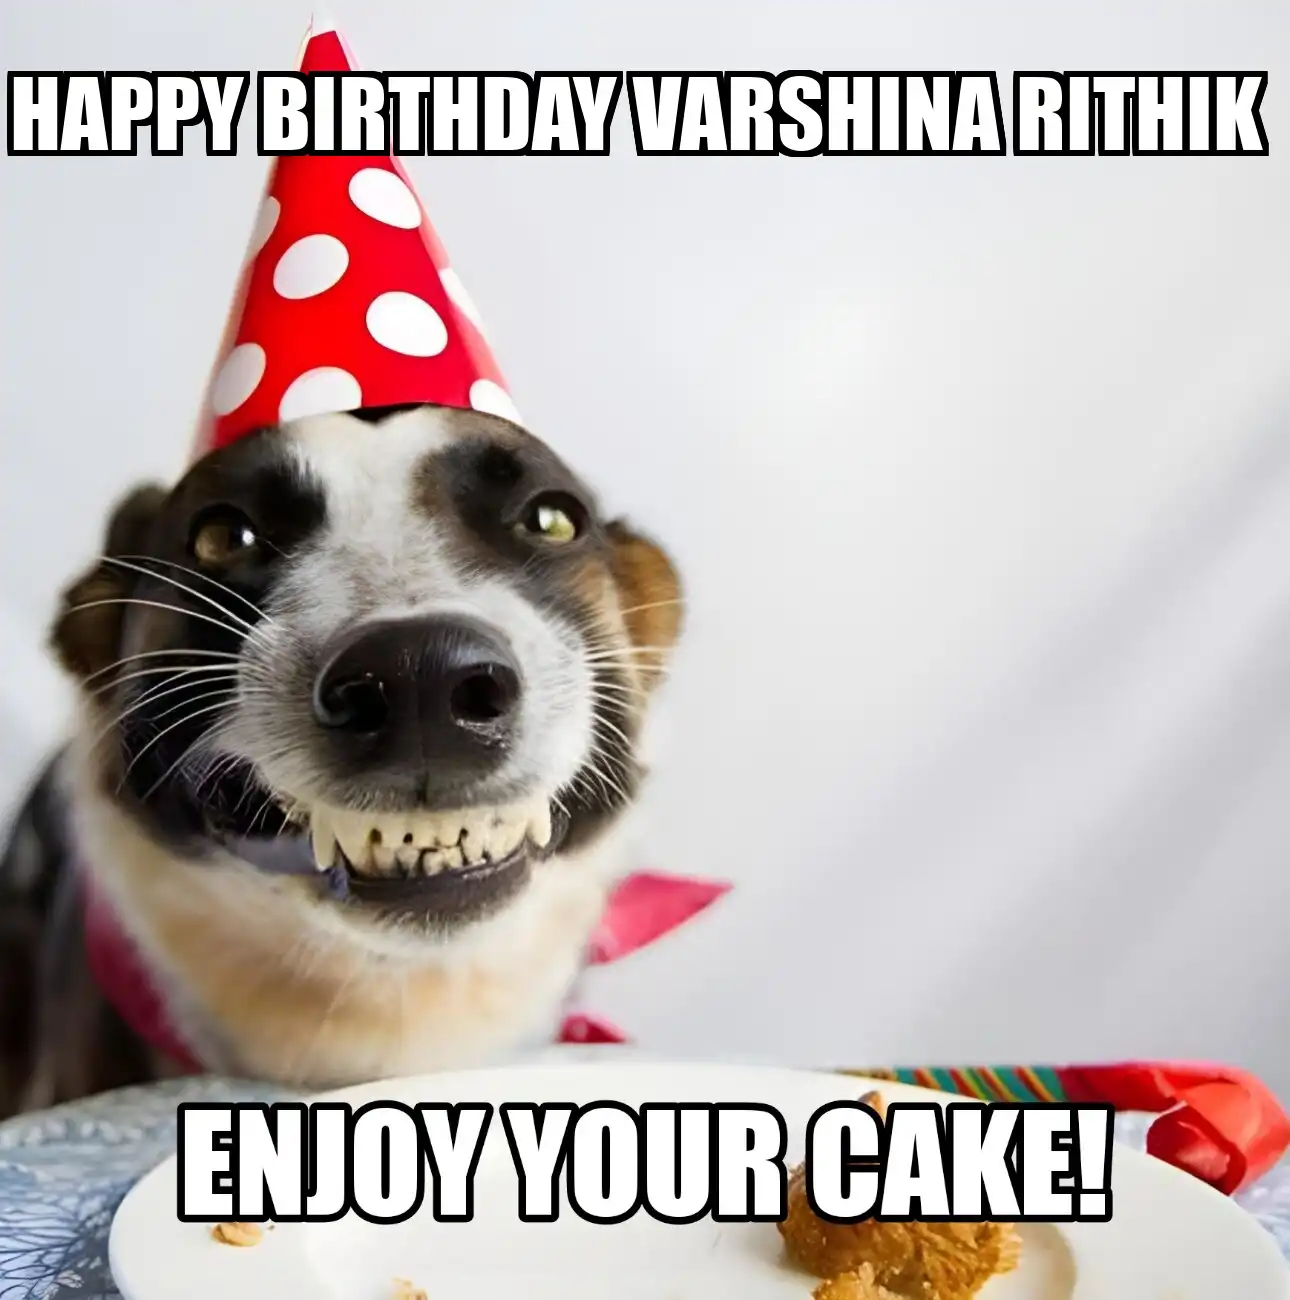 Happy Birthday Varshina rithik Enjoy Your Cake Dog Meme